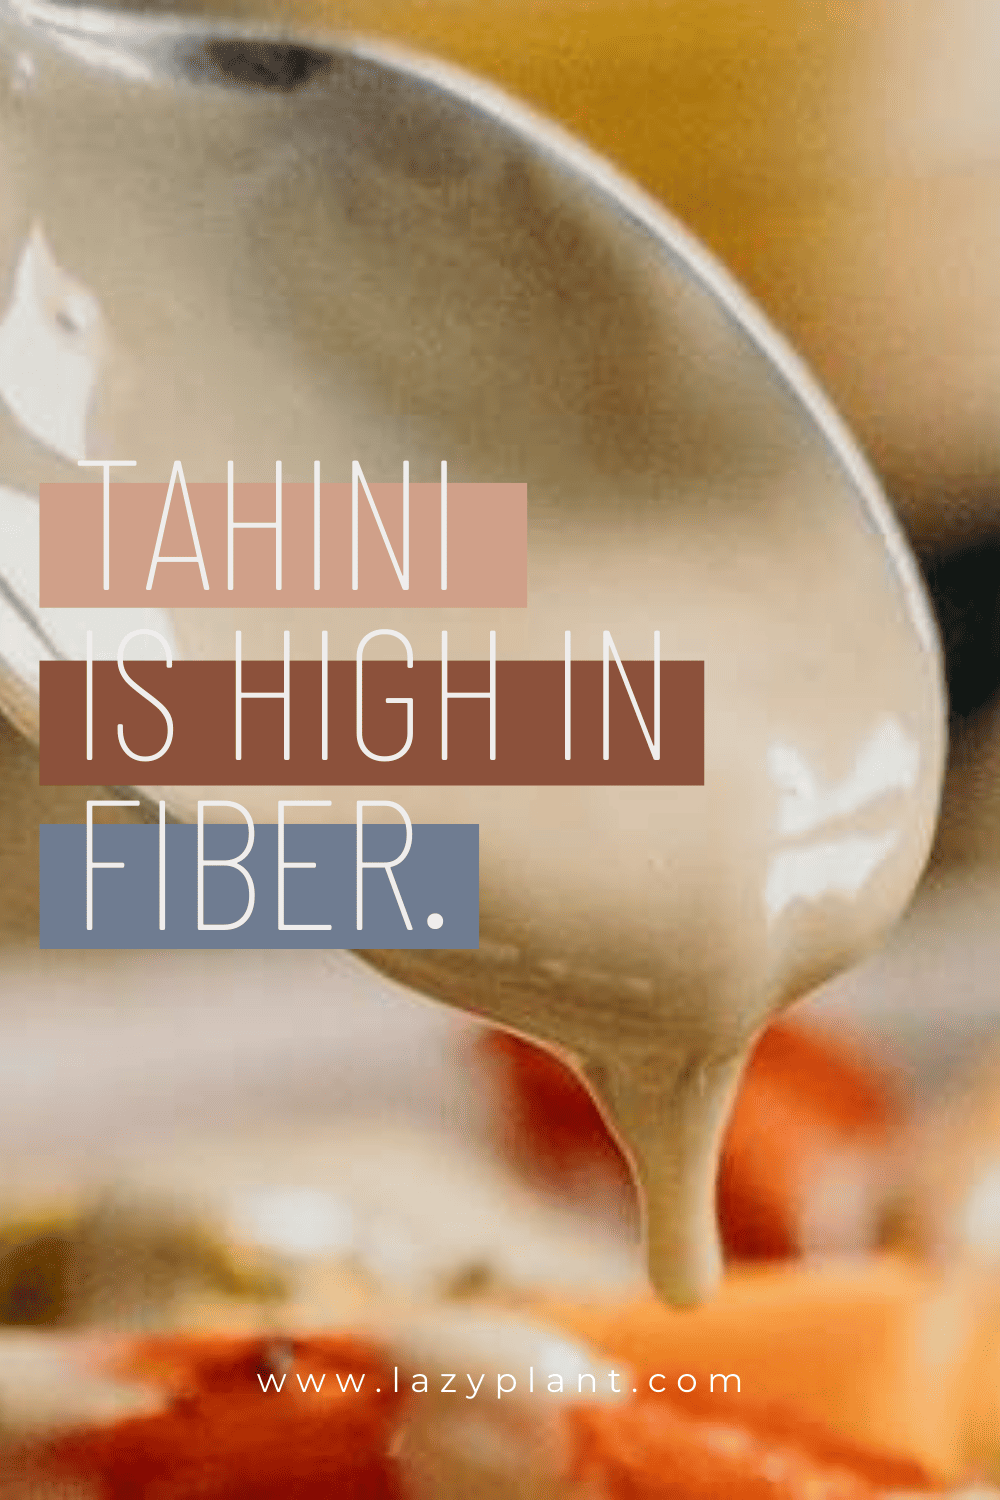 Tahini is a favorite, fiber-rich spread.